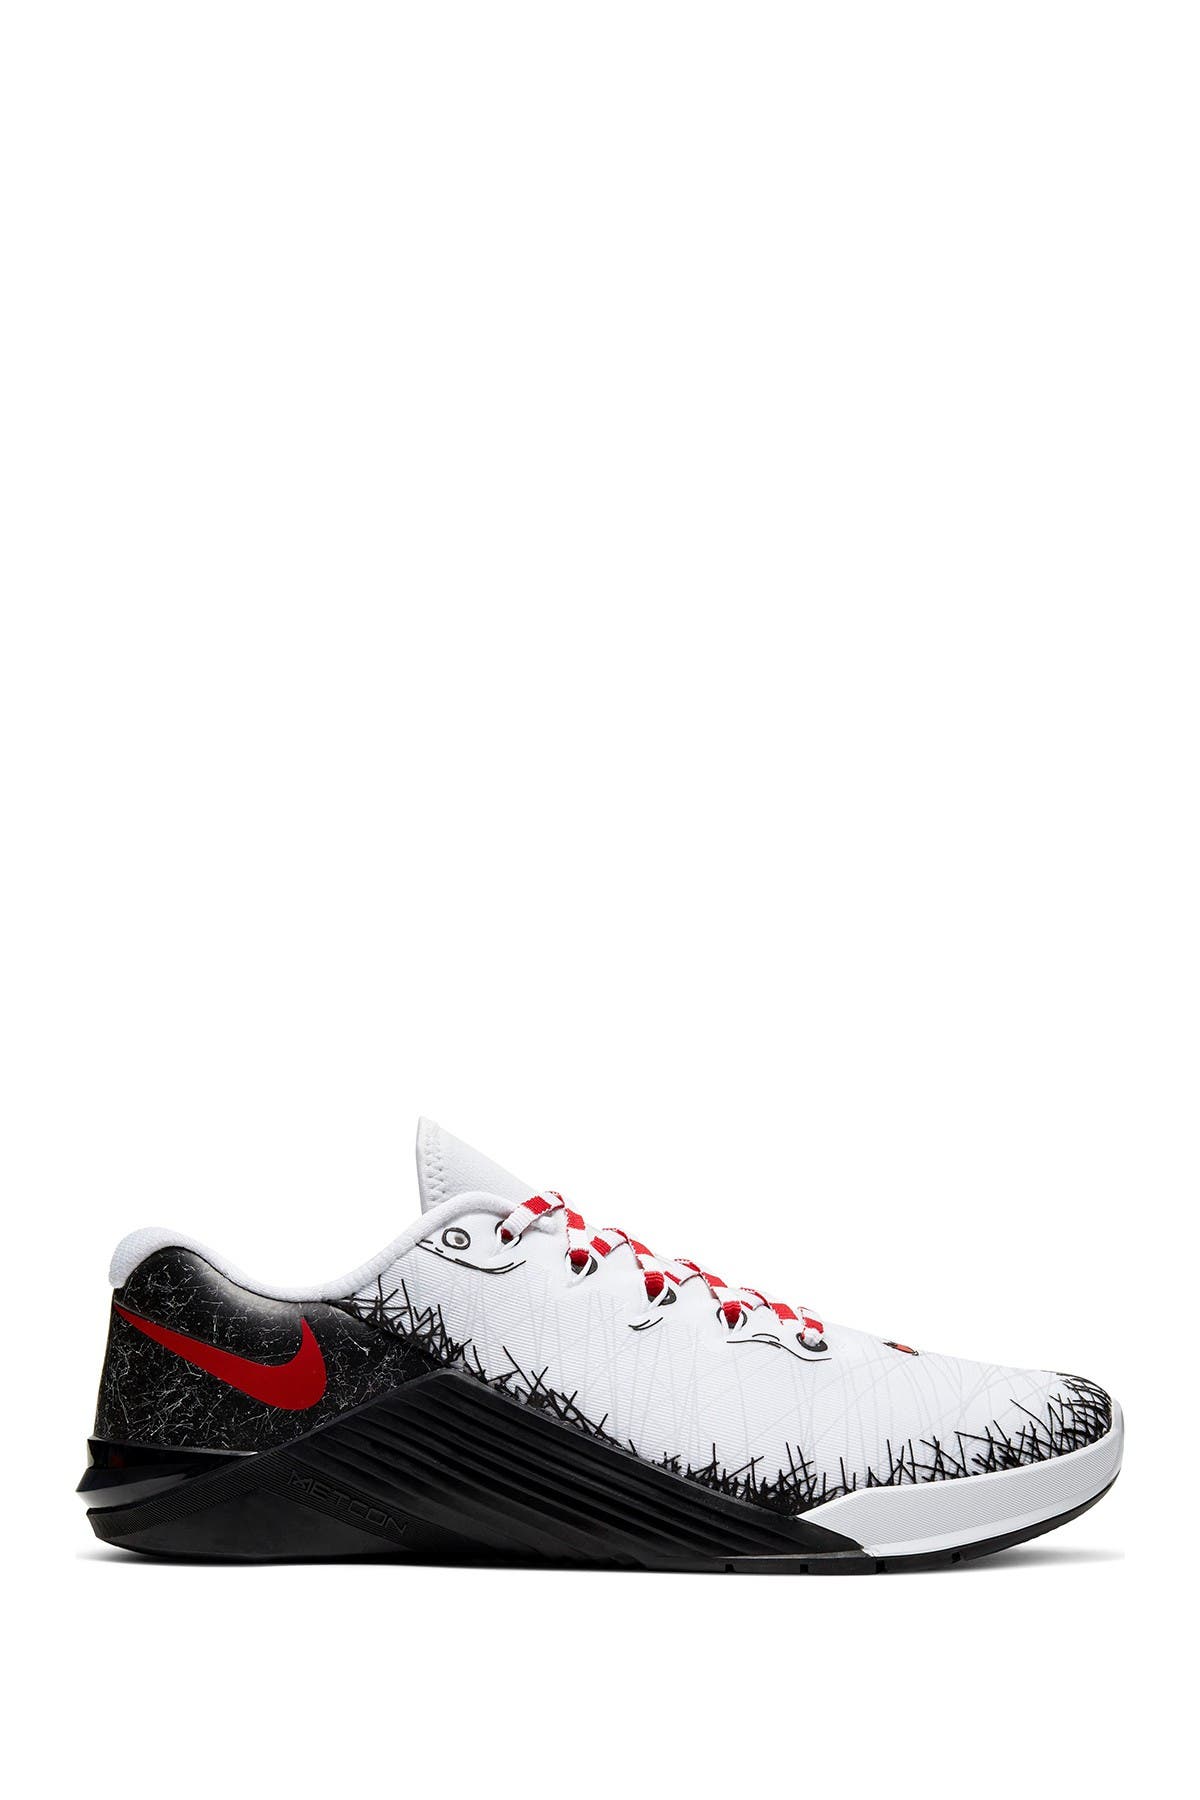 Nike | Metcon 5 AMP Training Shoe 